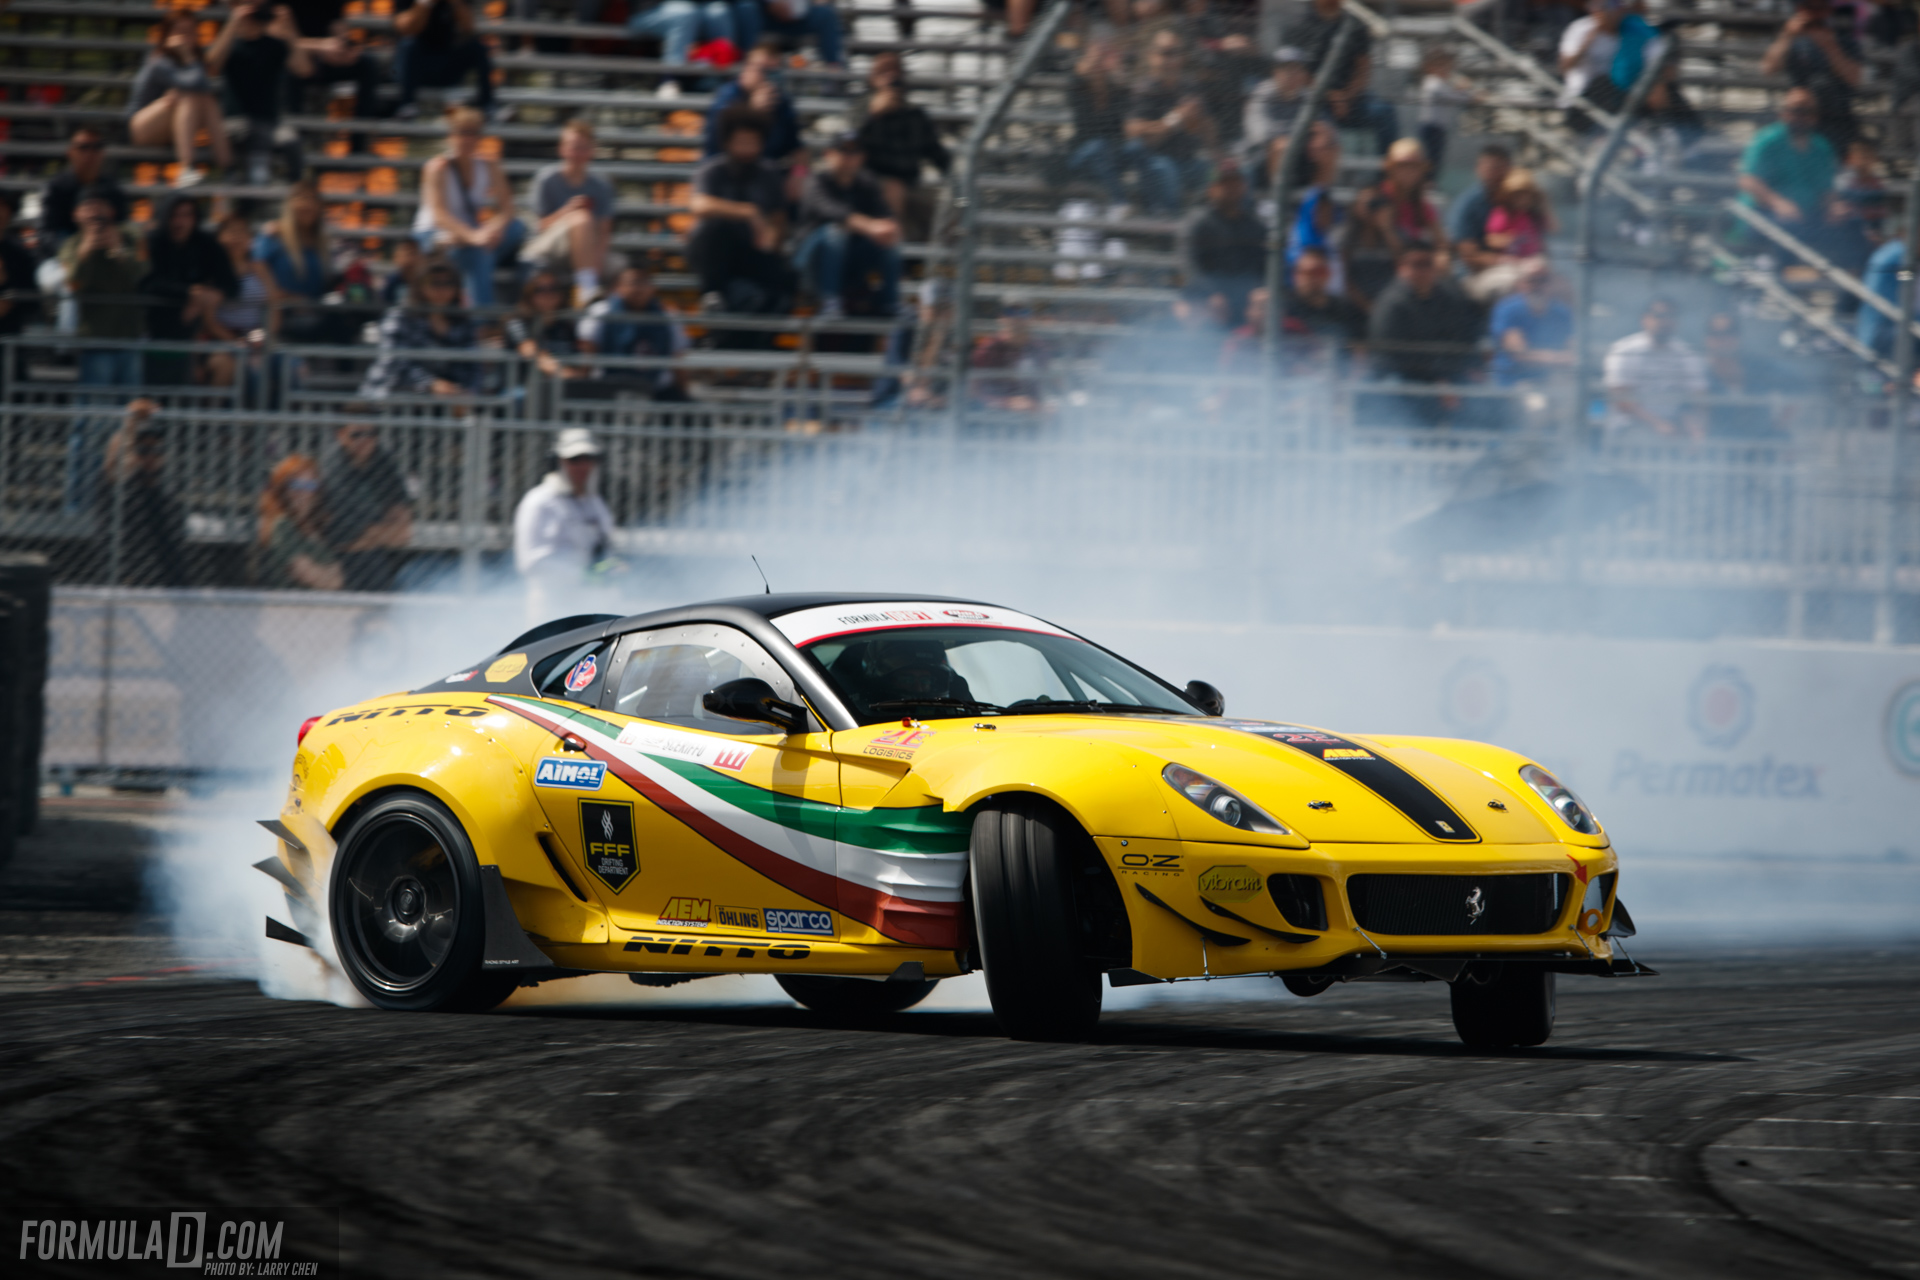 Holy smoke, it's a 917bhp Ferrari drift car